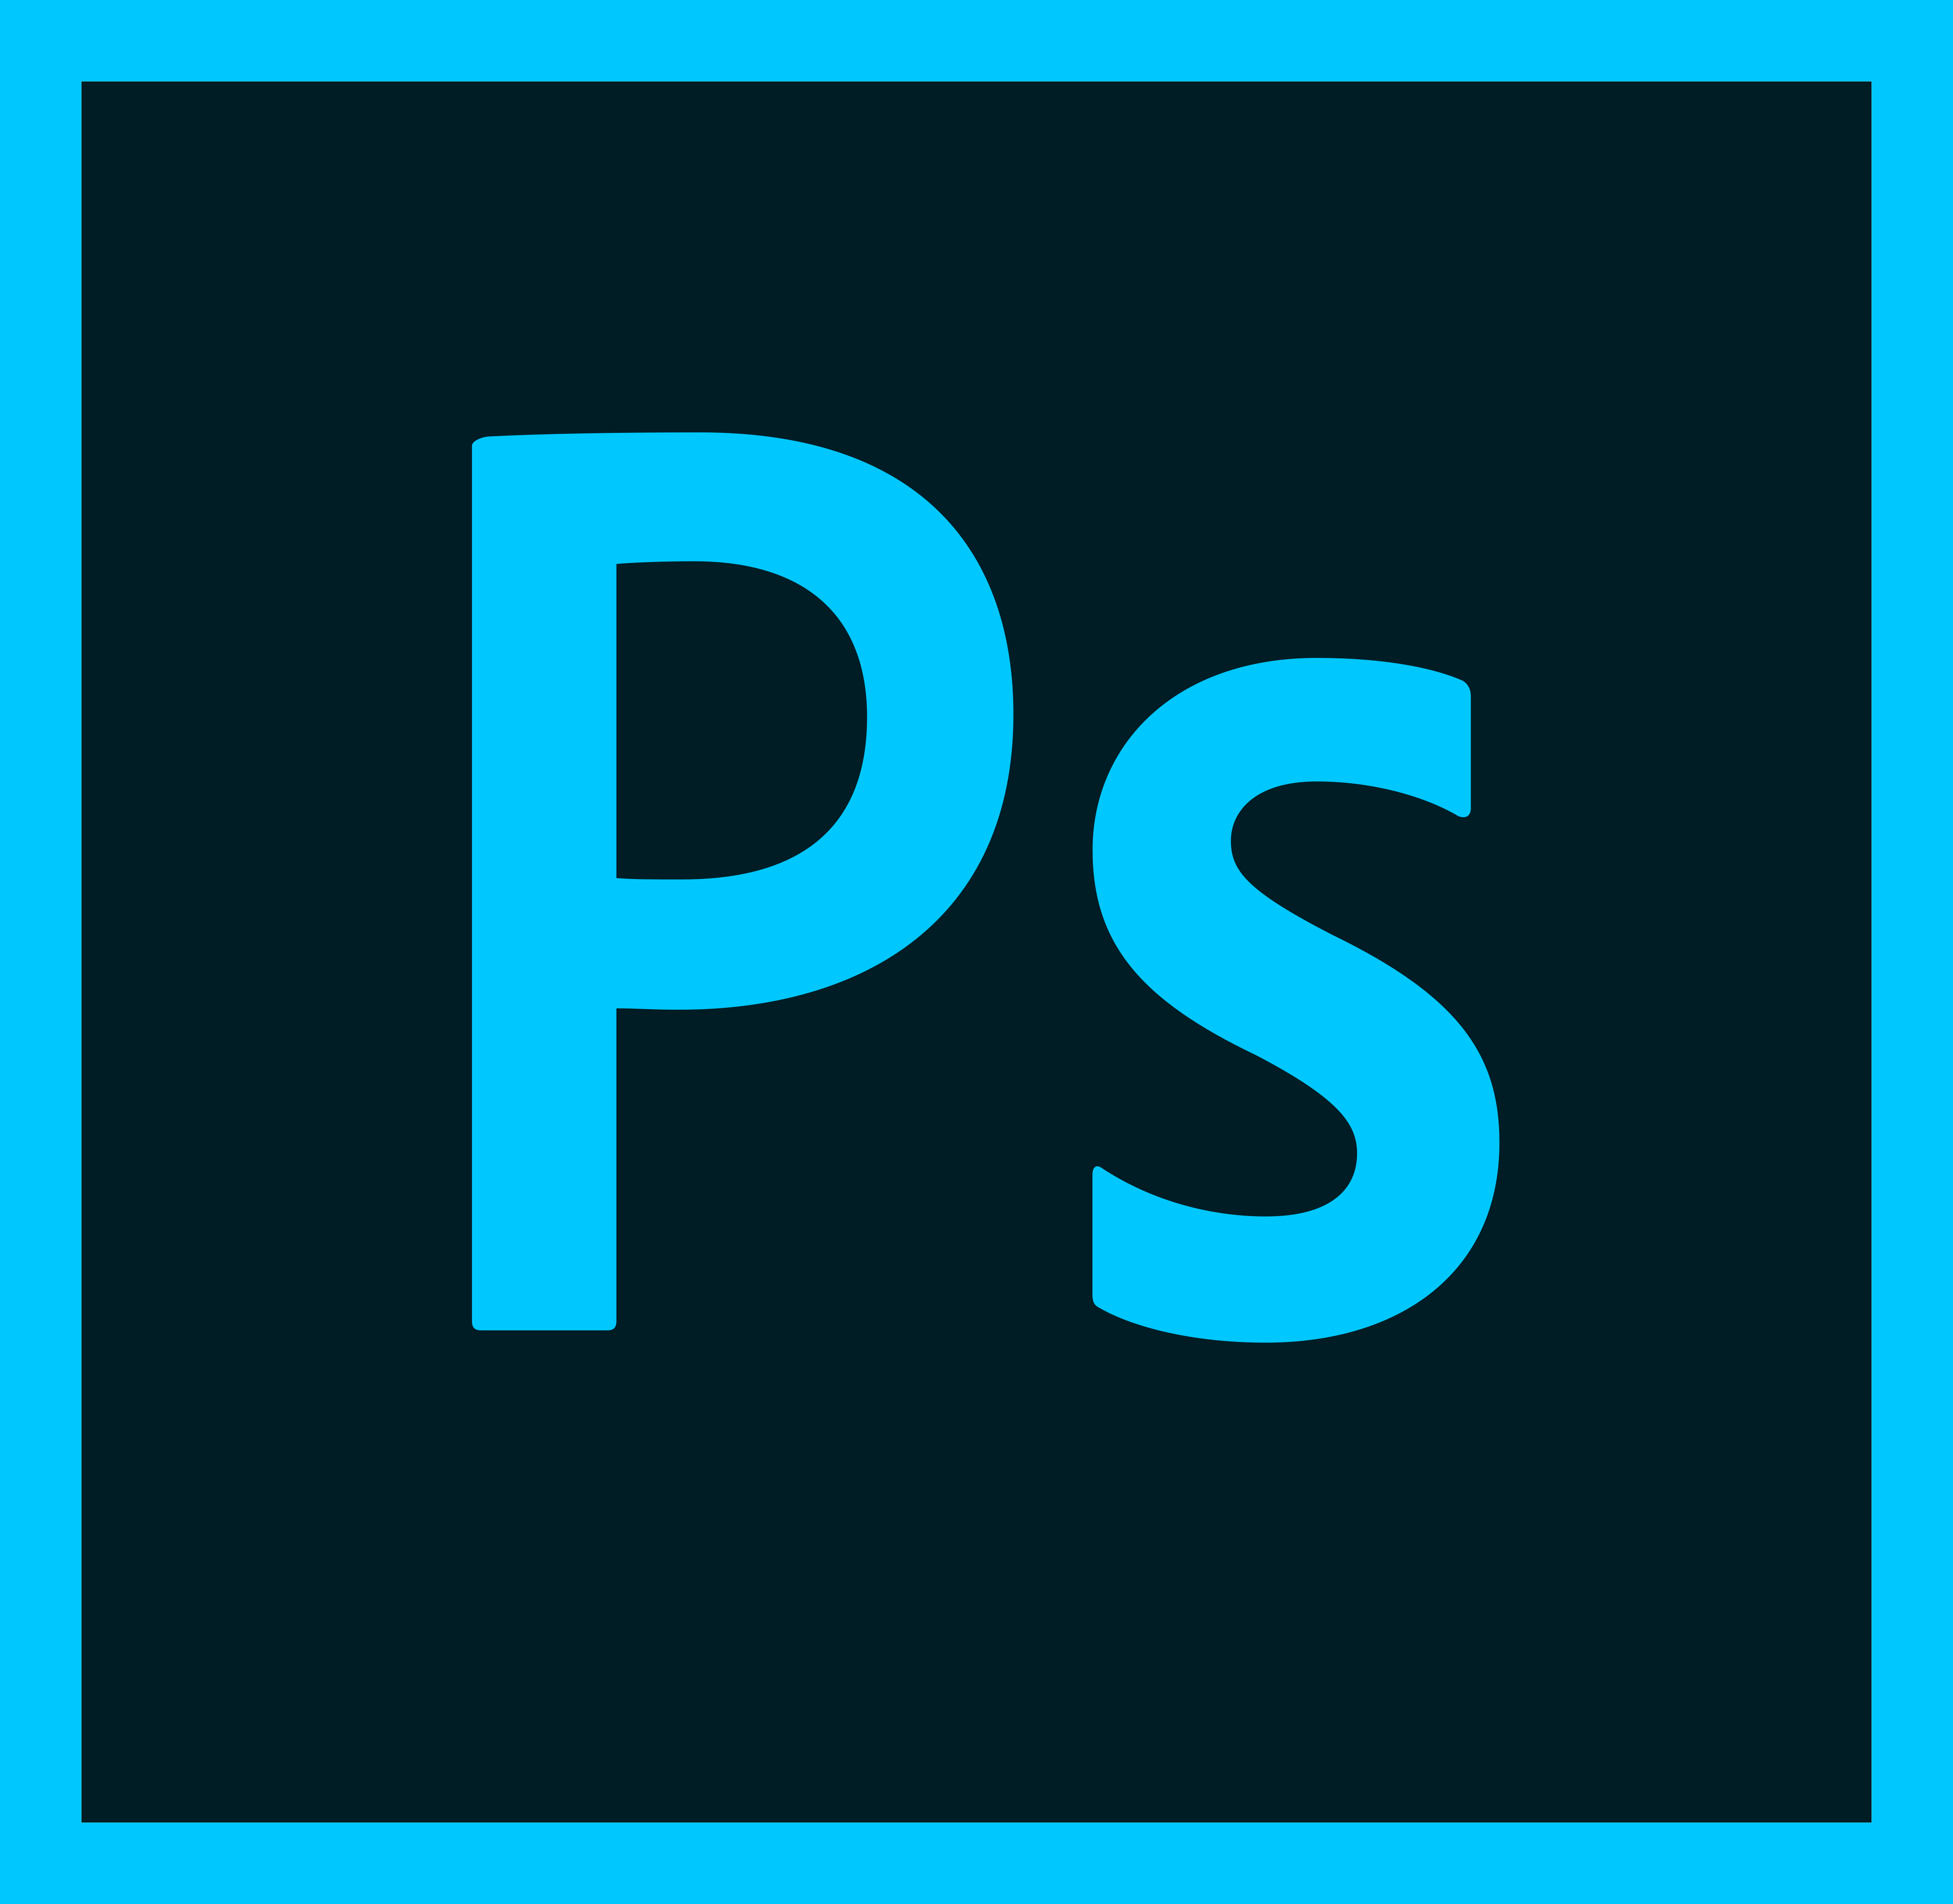 adobe photoshop logo download